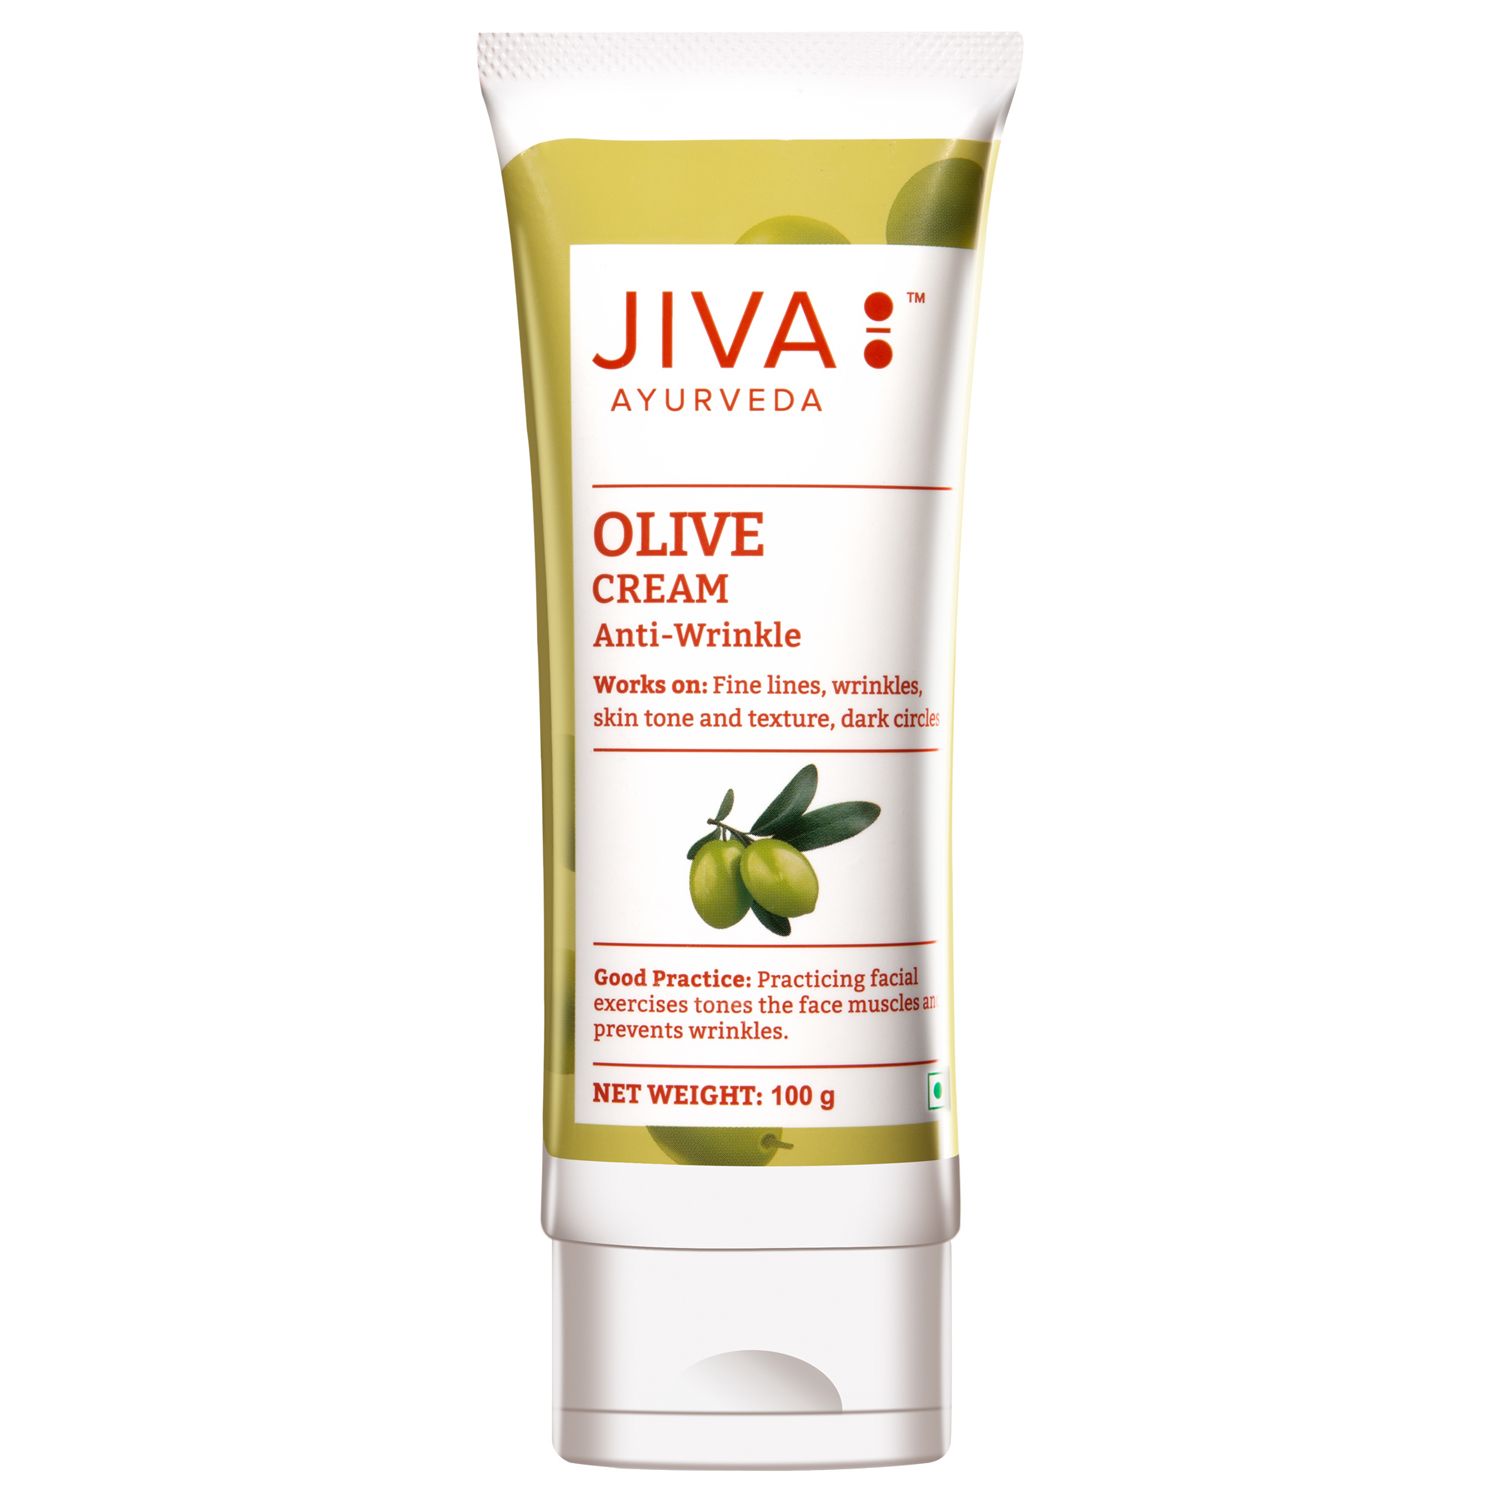 Buy Jiva Ayurveda Olive Cream at Best Price Online